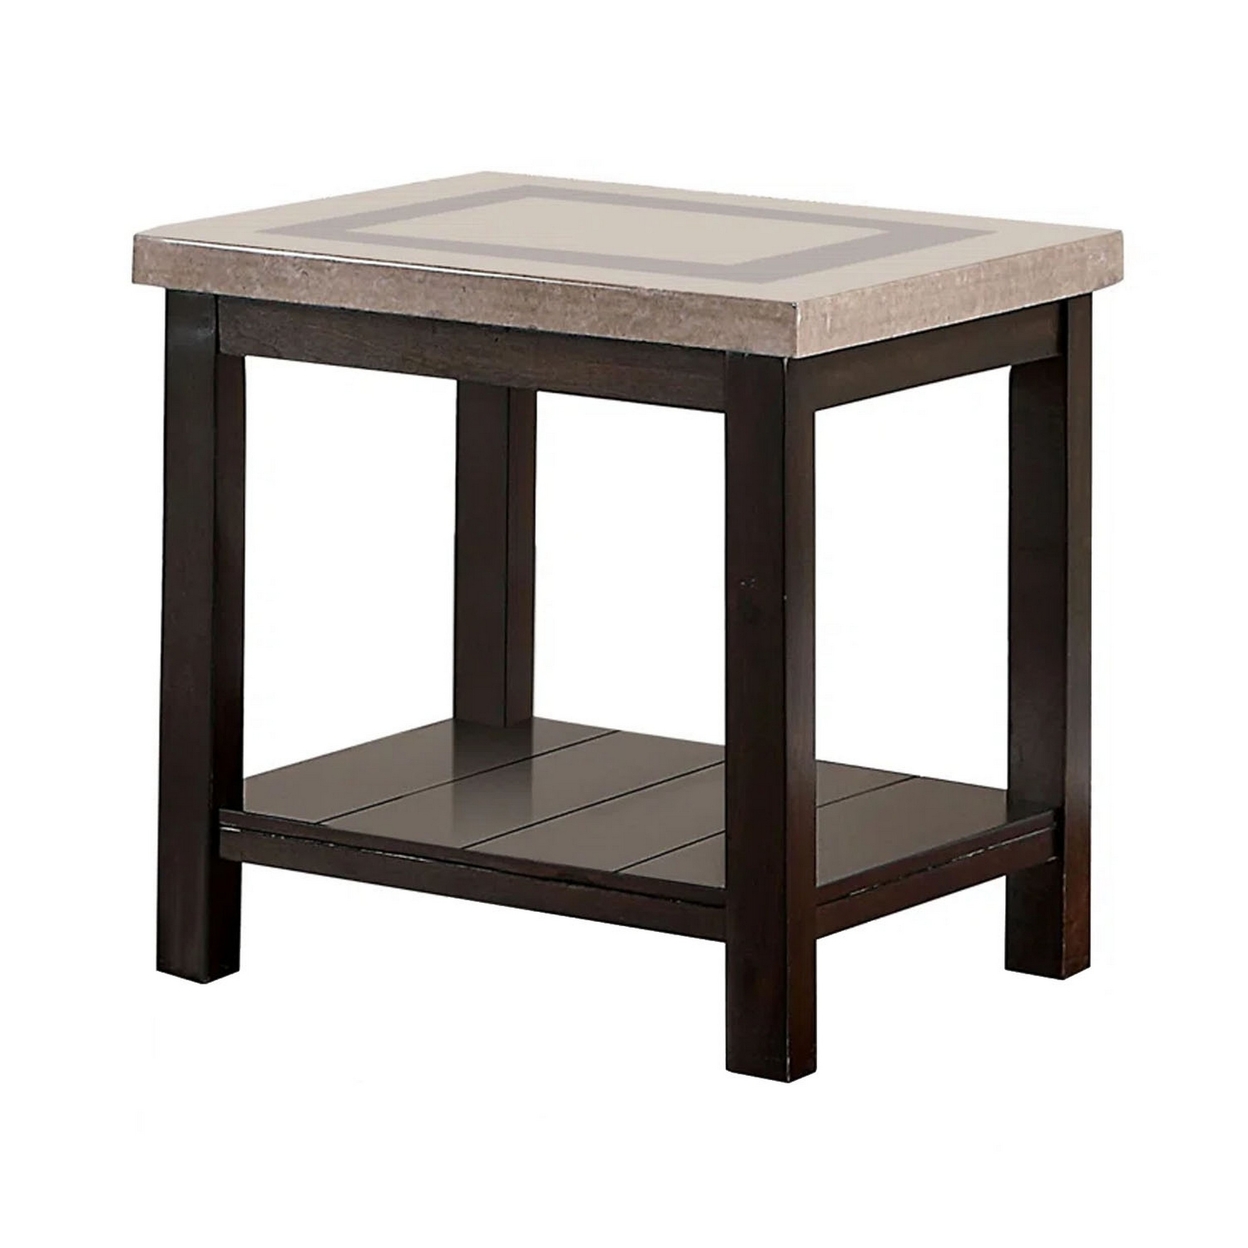 Cora 24 Inch Side End Table, Faux Marble Top, Block Legs, Espresso Brown- Saltoro Sherpi